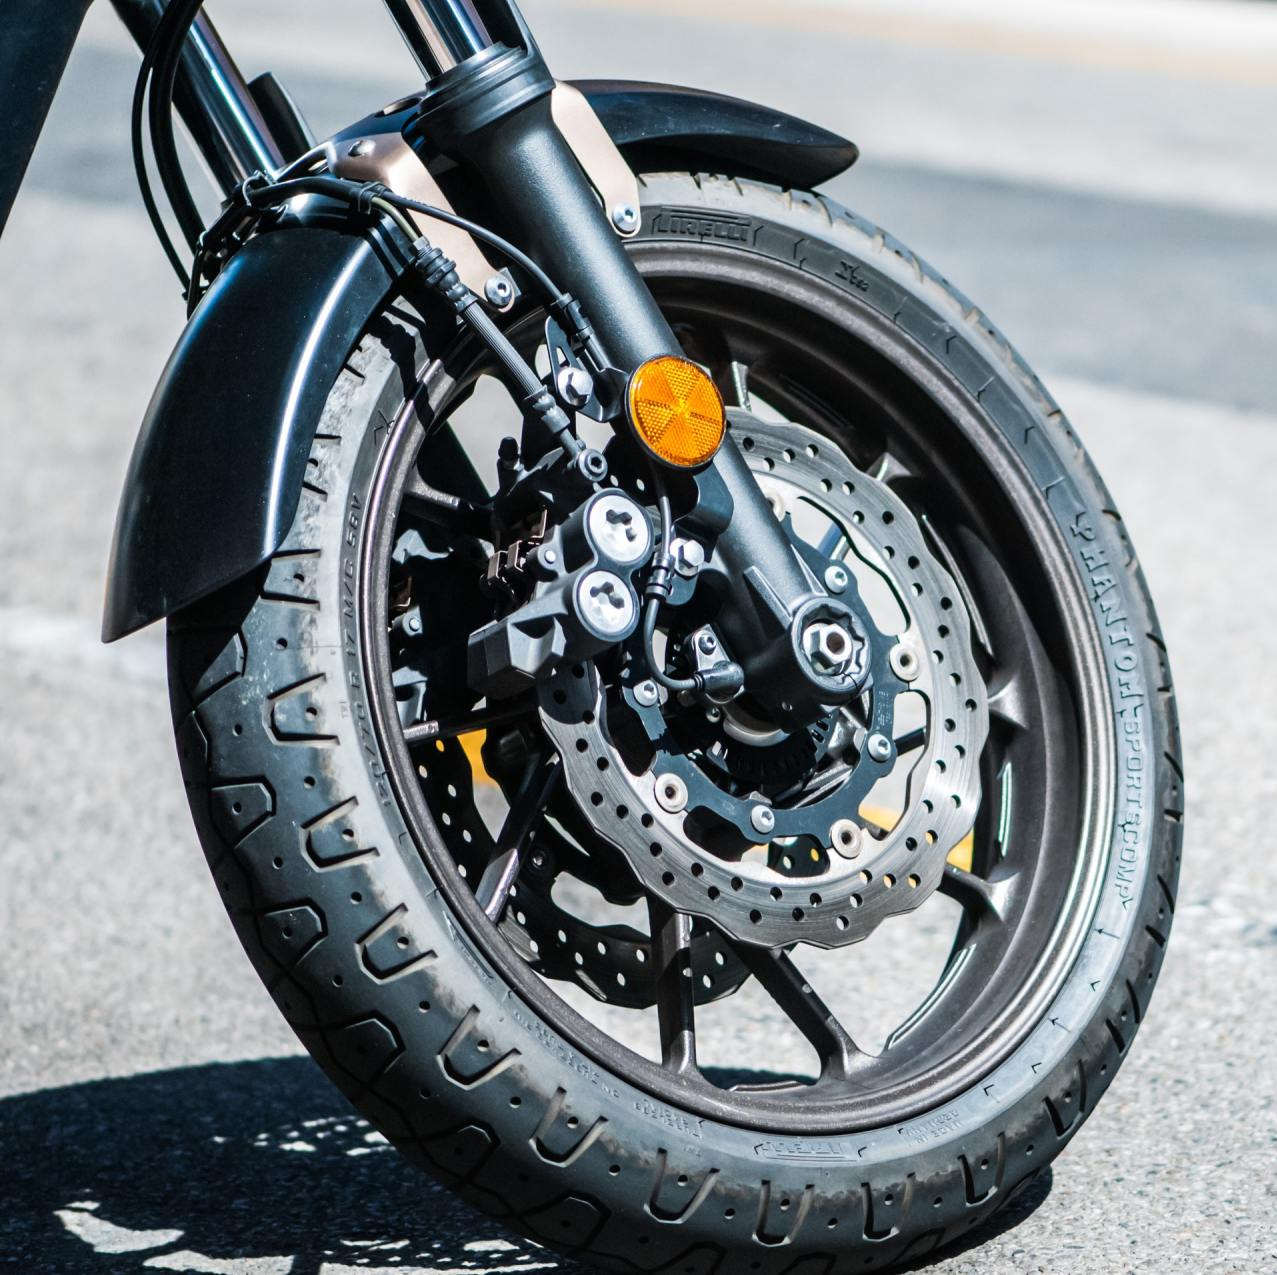 Motorcycle wheel on asphalt